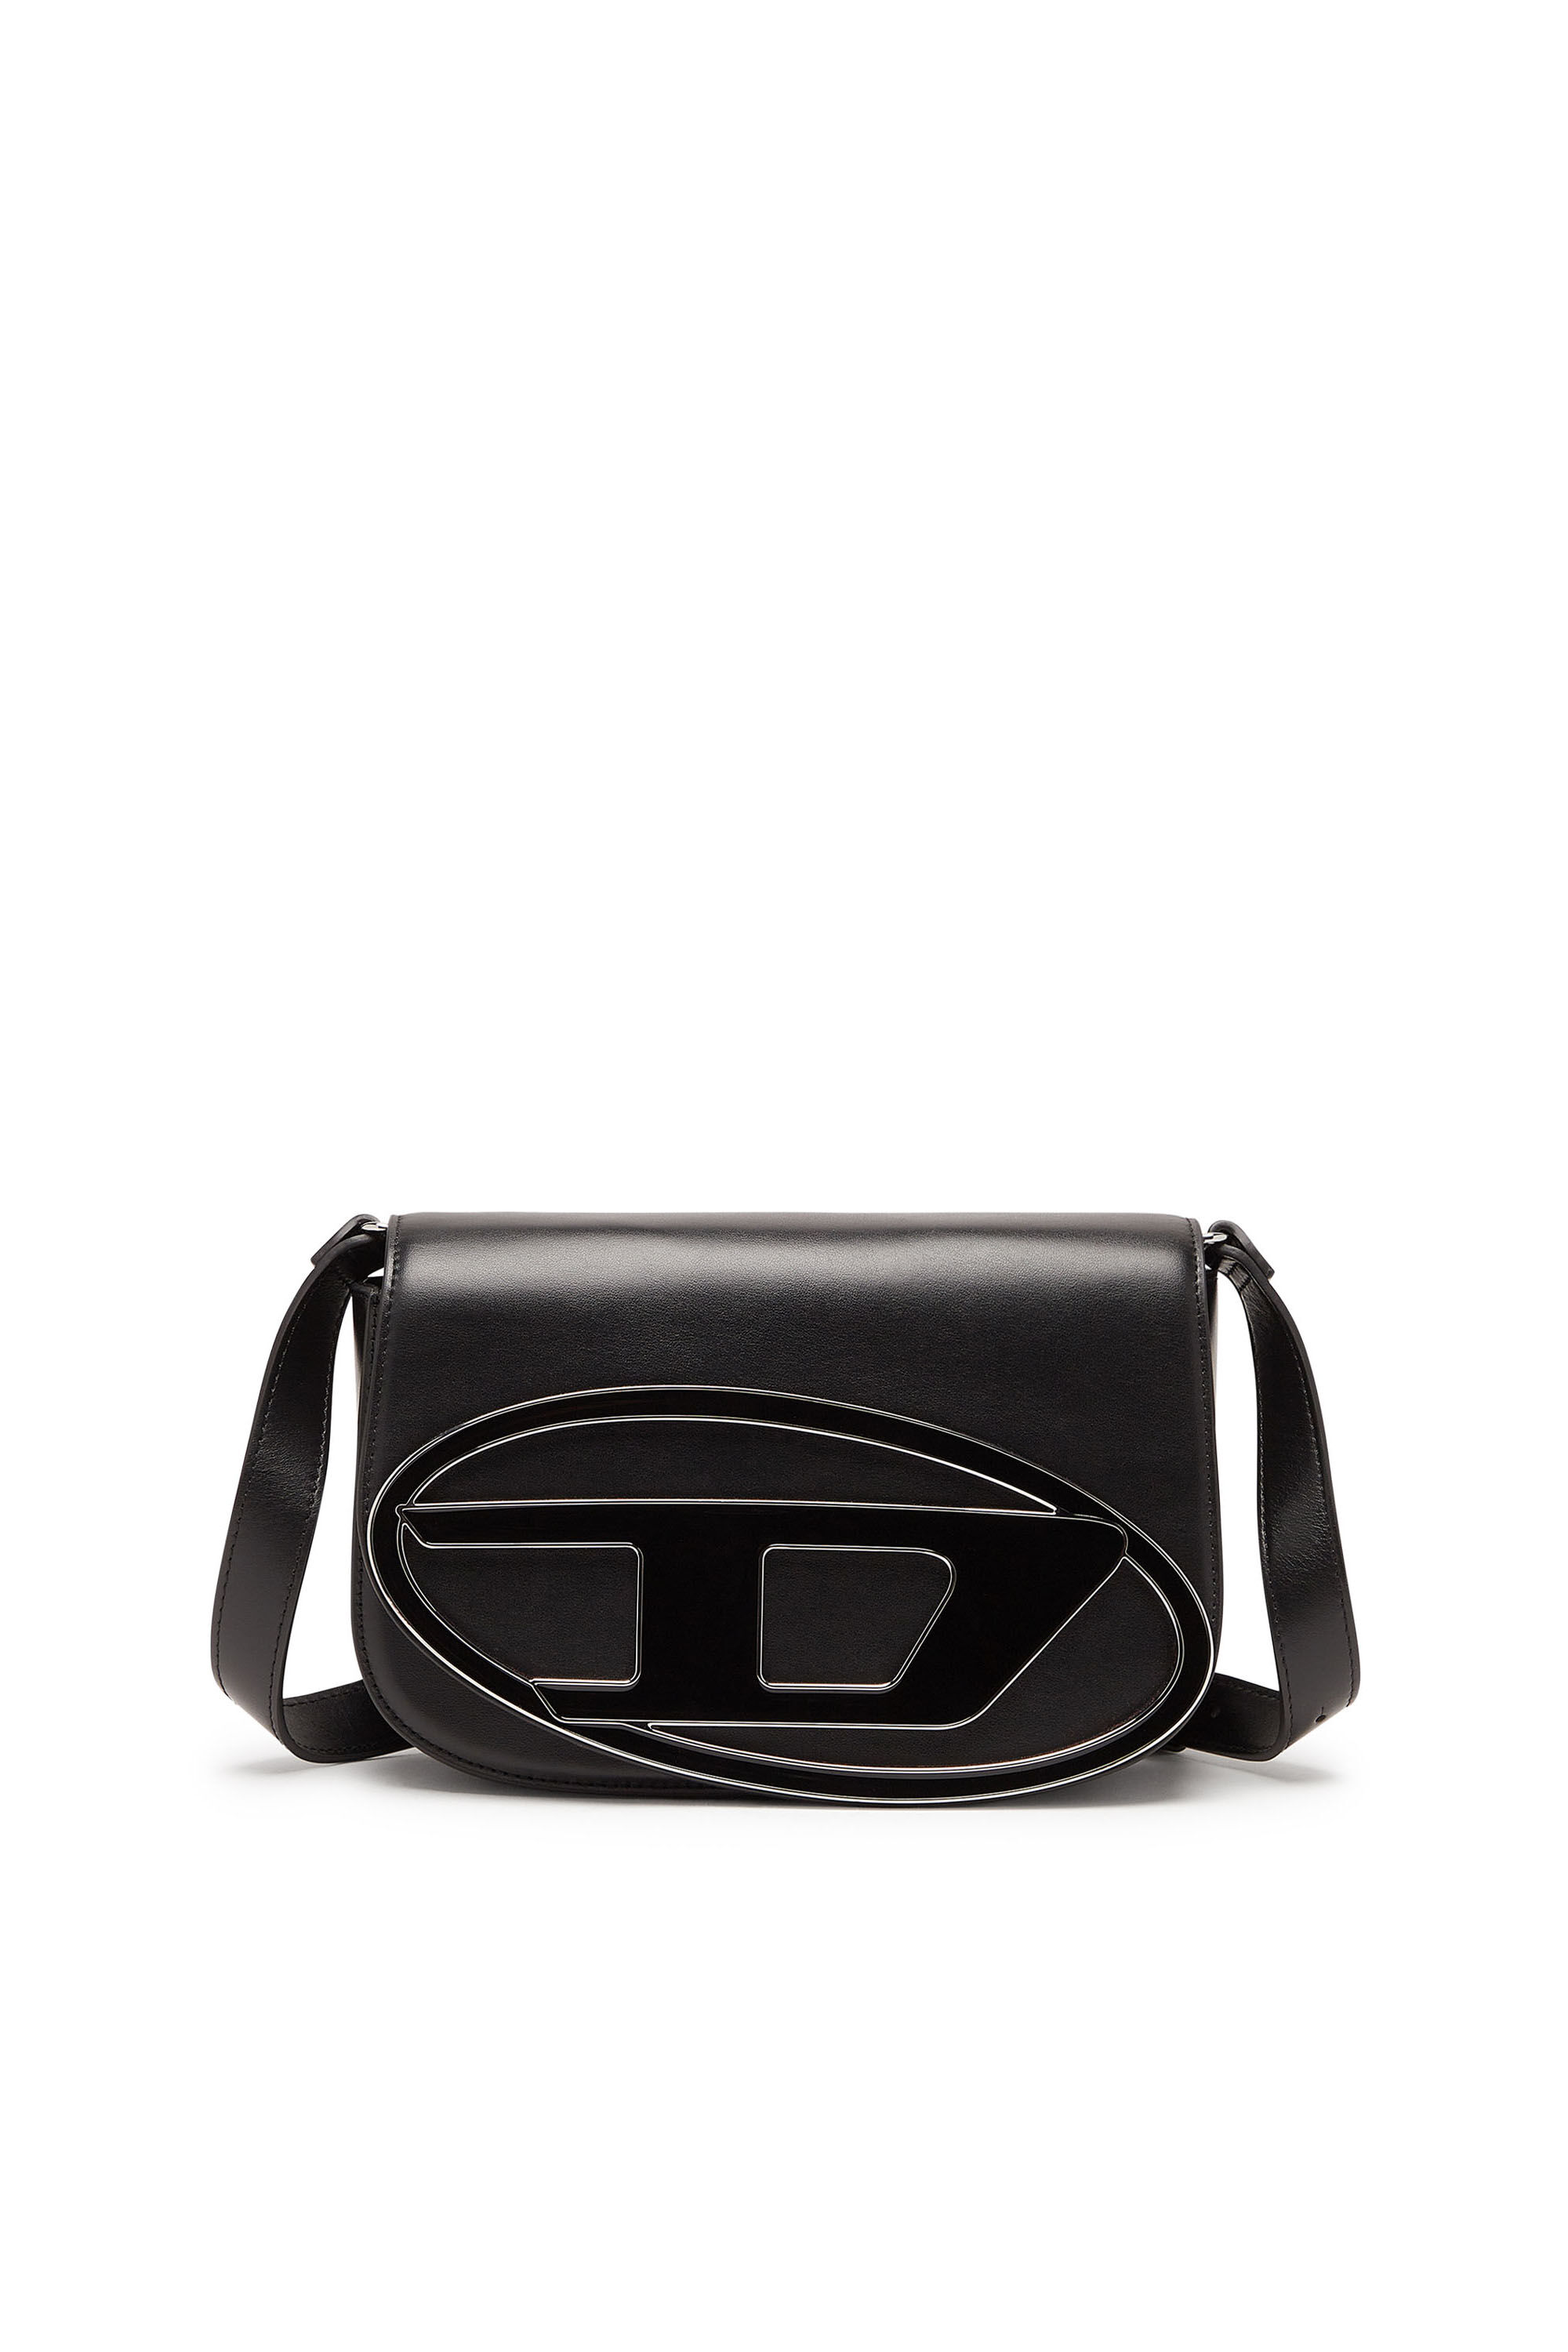 Diesel - 1DR M, Woman 1DR M-Iconic medium shoulder bag in leather in Black - Image 1